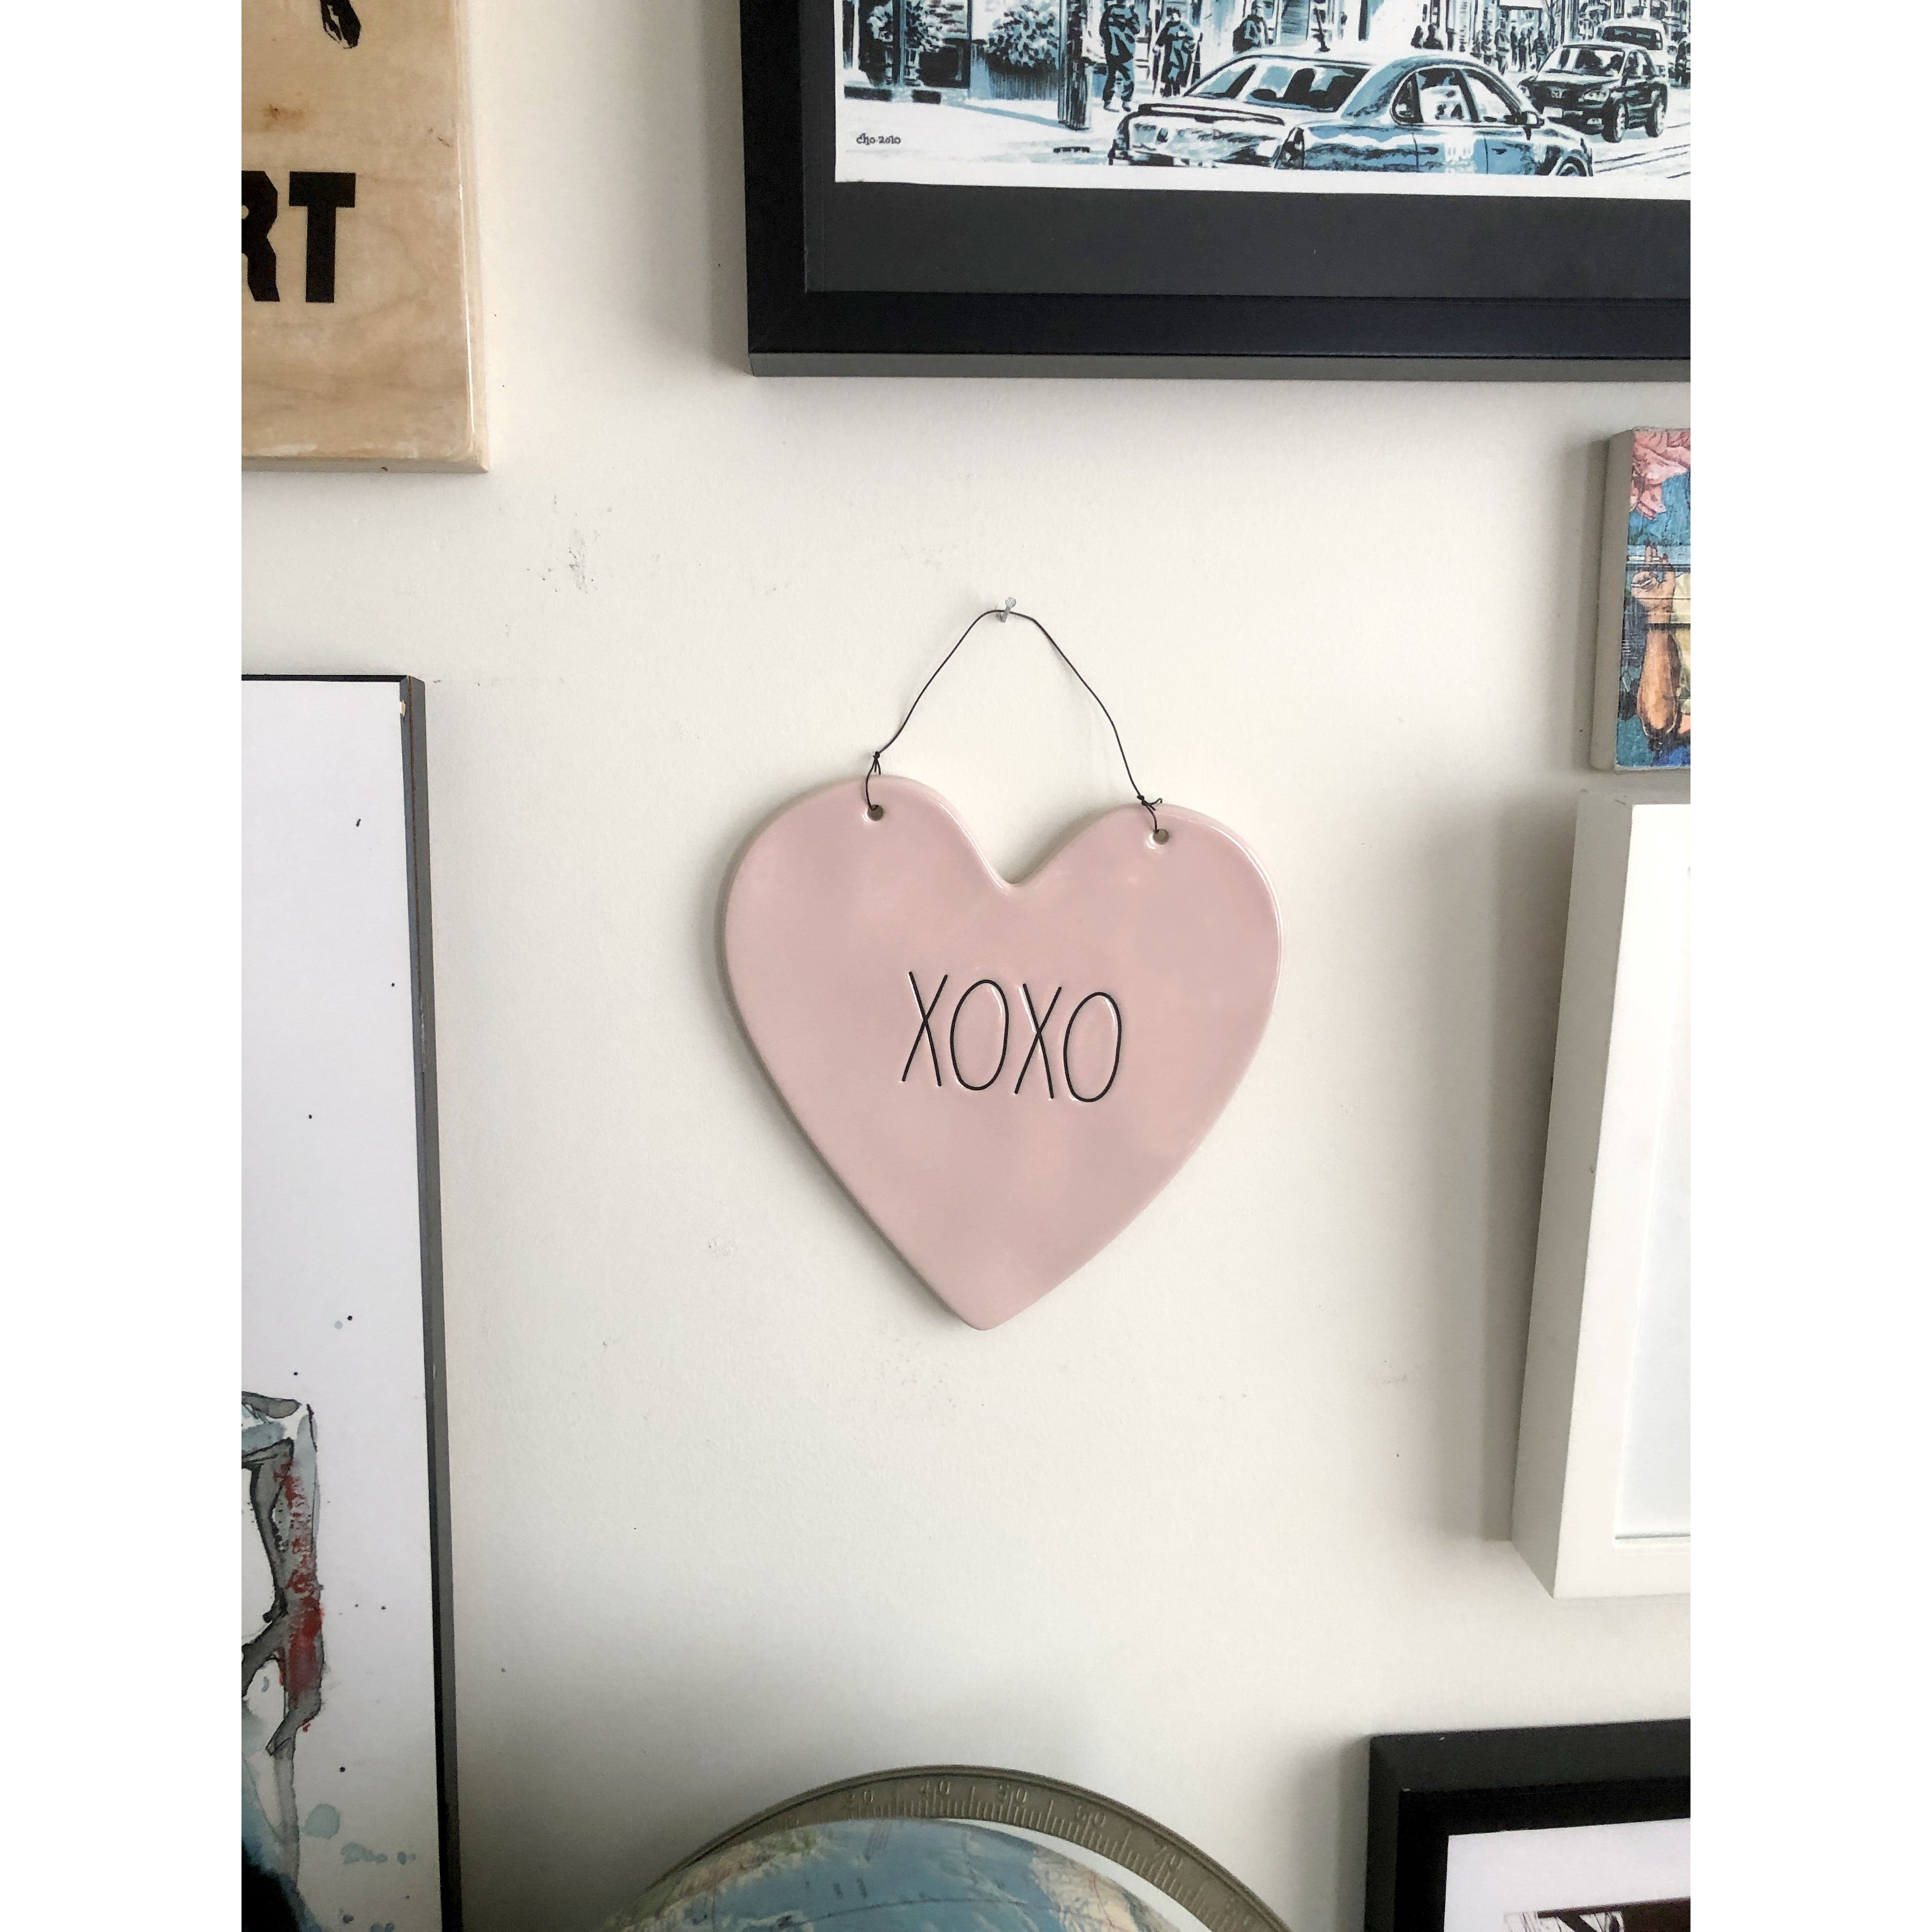 Rae Dunn Heart Wall Hanging / Ceramic / Wall Art / Valentines Day Decor